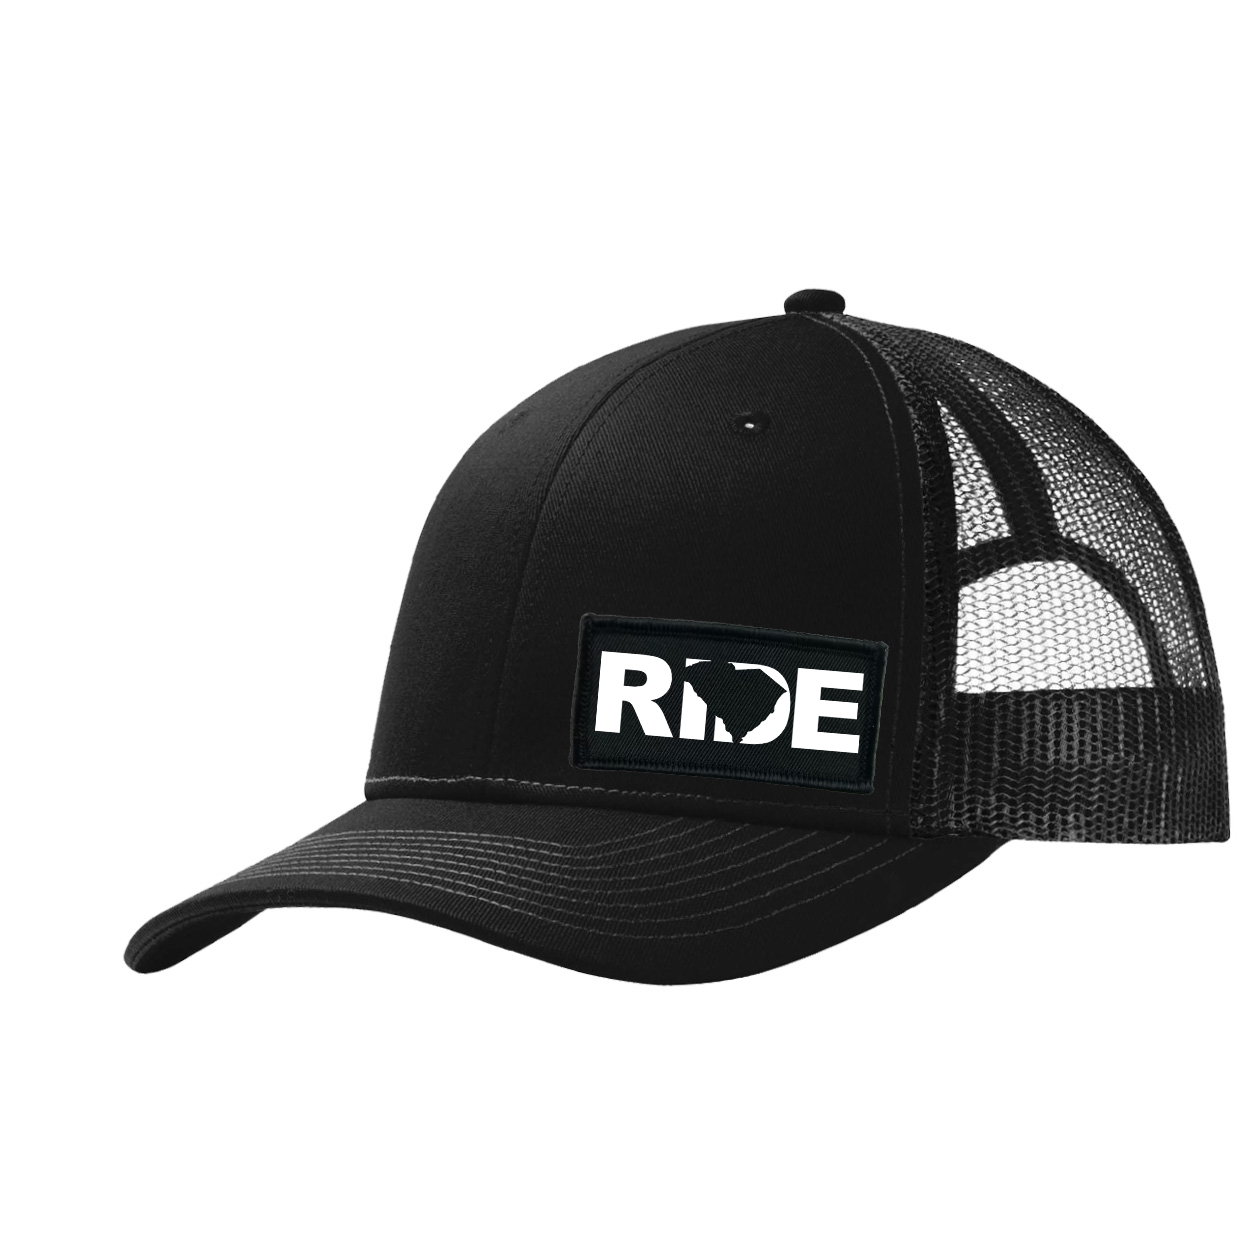 Ride South Carolina Night Out Woven Patch Snapback Trucker Hat Black (White Logo)